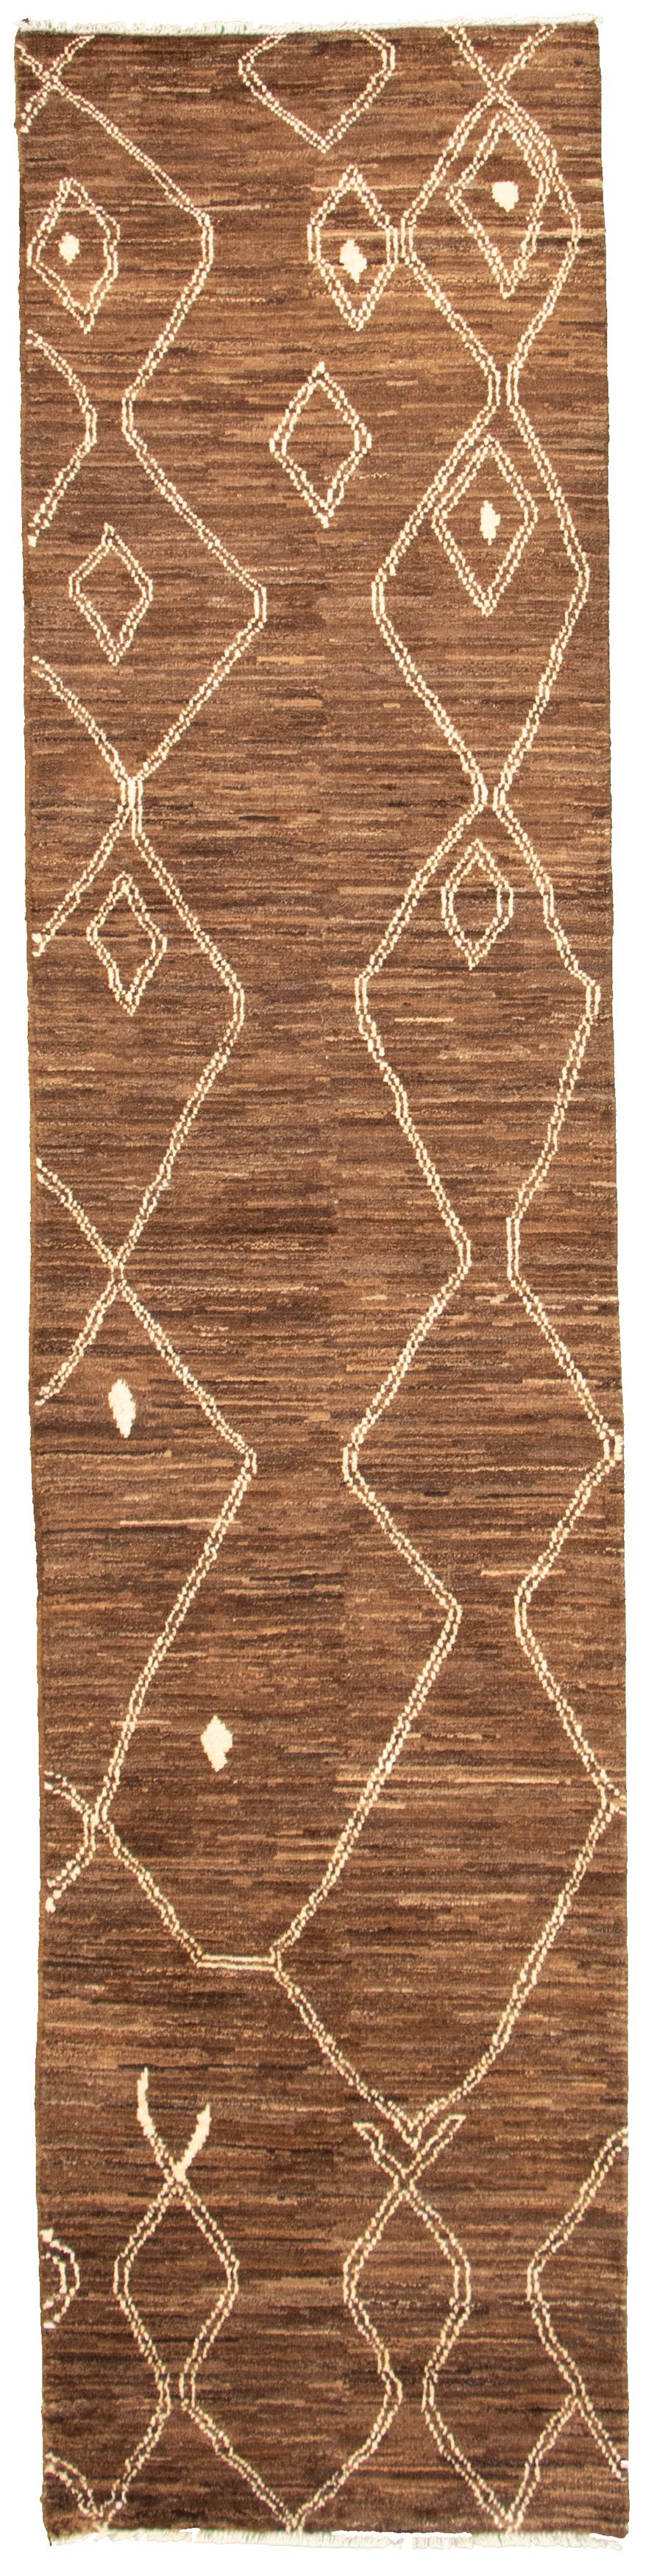 Hand-knotted Marrakech Dark Brown Wool Rug 2'9" x 11'9" Size: 2'9" x 11'9"  